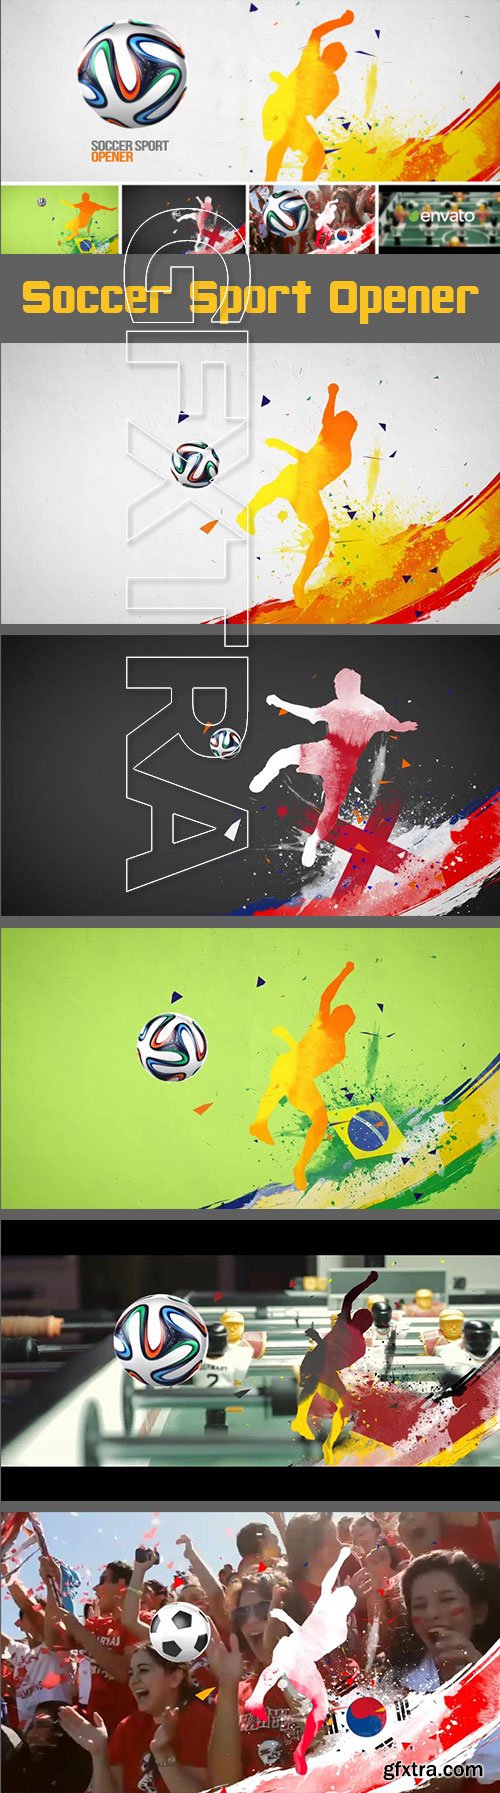 VideoHive - Soccer Sport Opener 7811177